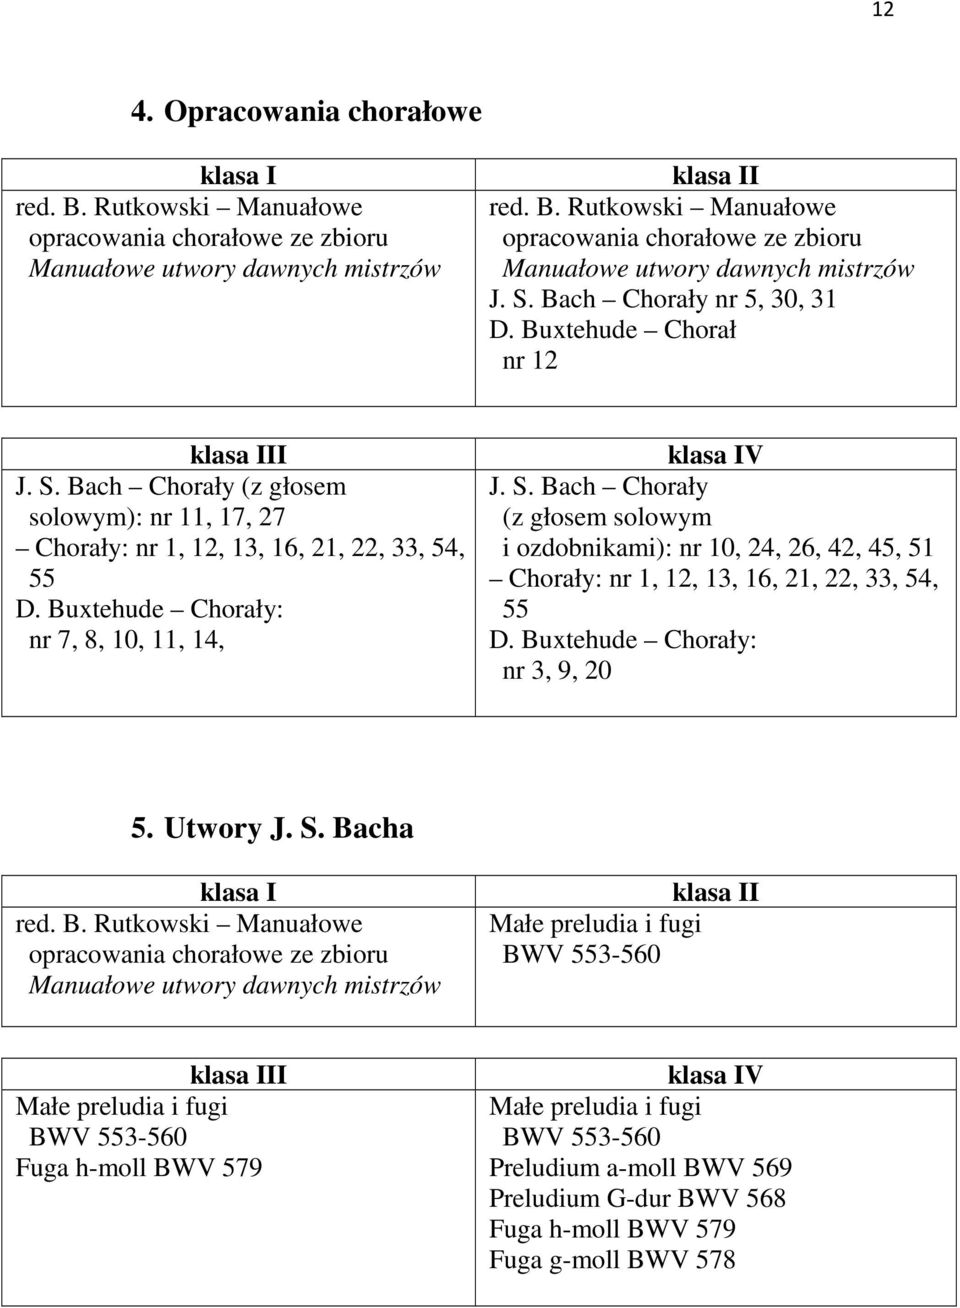 Buxtehude Chorały: nr 7, 8, 10, 11, 14, klasa IV J. S. Bach Chorały (z głosem solowym i ozdobnikami): nr 10, 24, 26, 42, 45, 51 Chorały: nr 1, 12, 13, 16, 21, 22, 33, 54, 55 D.